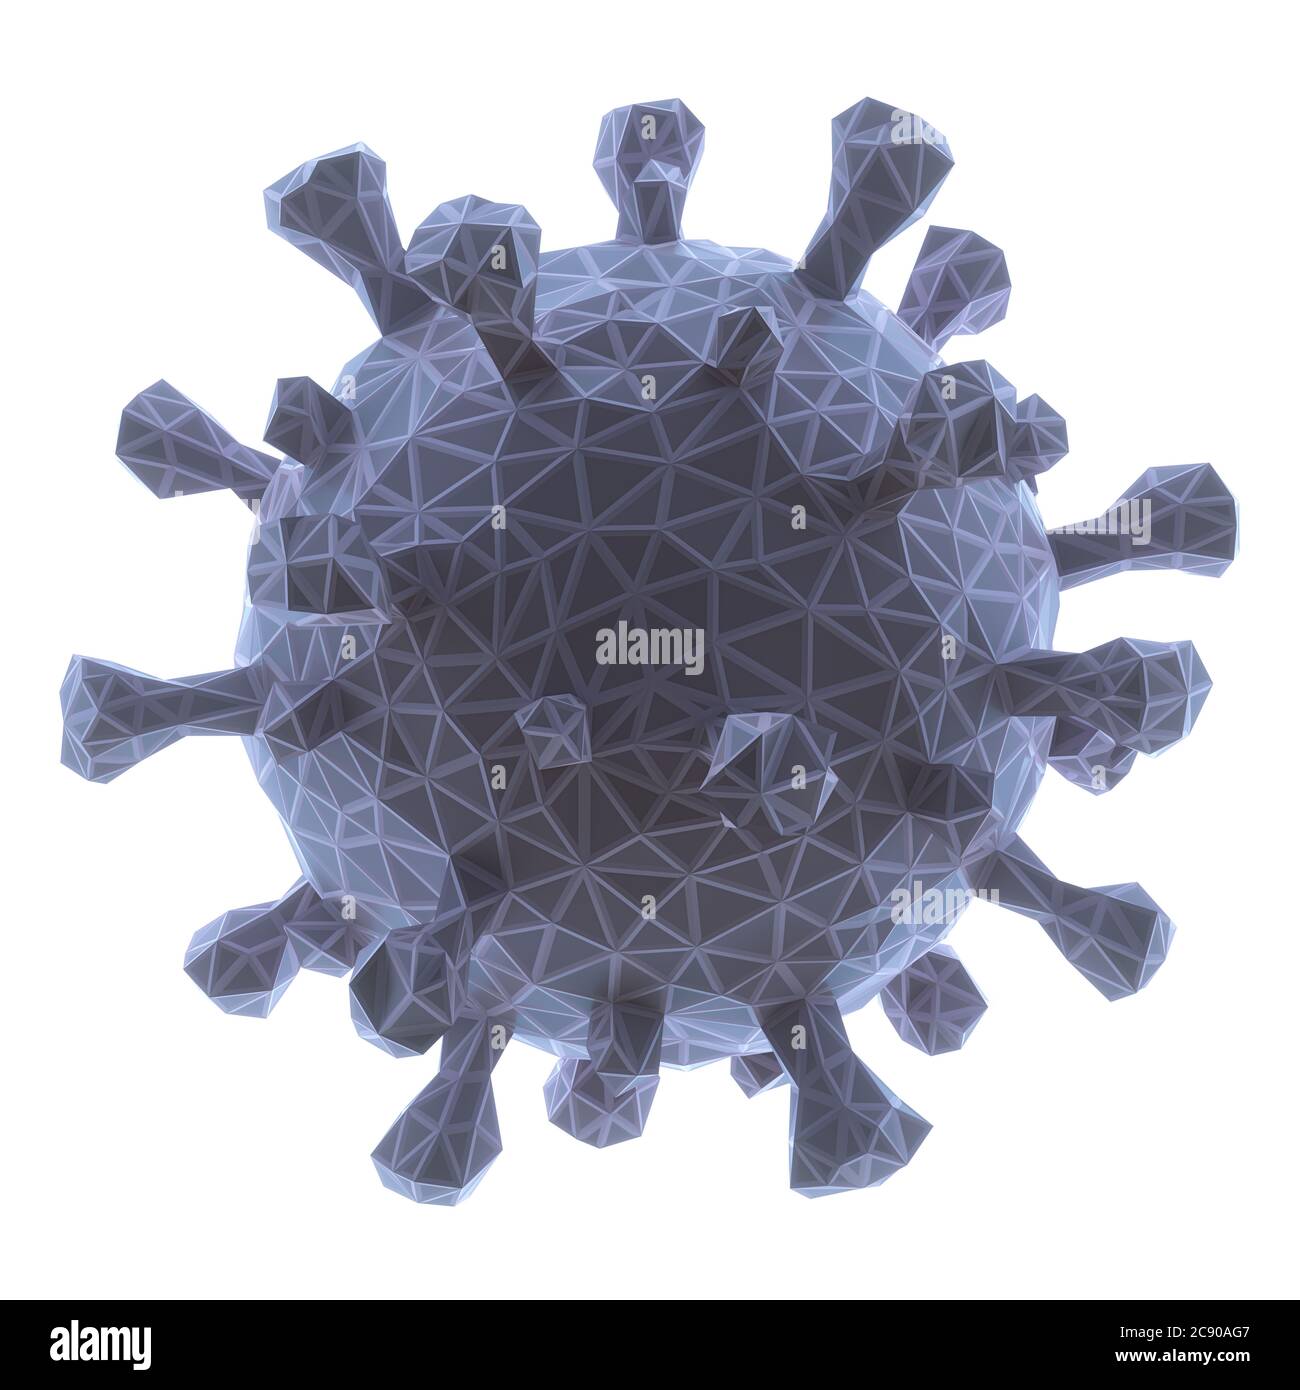 Covid-19, Coronavirus, 3D-Illustration polygonale konzeptionelle Struktur. Beschneidungspfad enthalten. Stockfoto